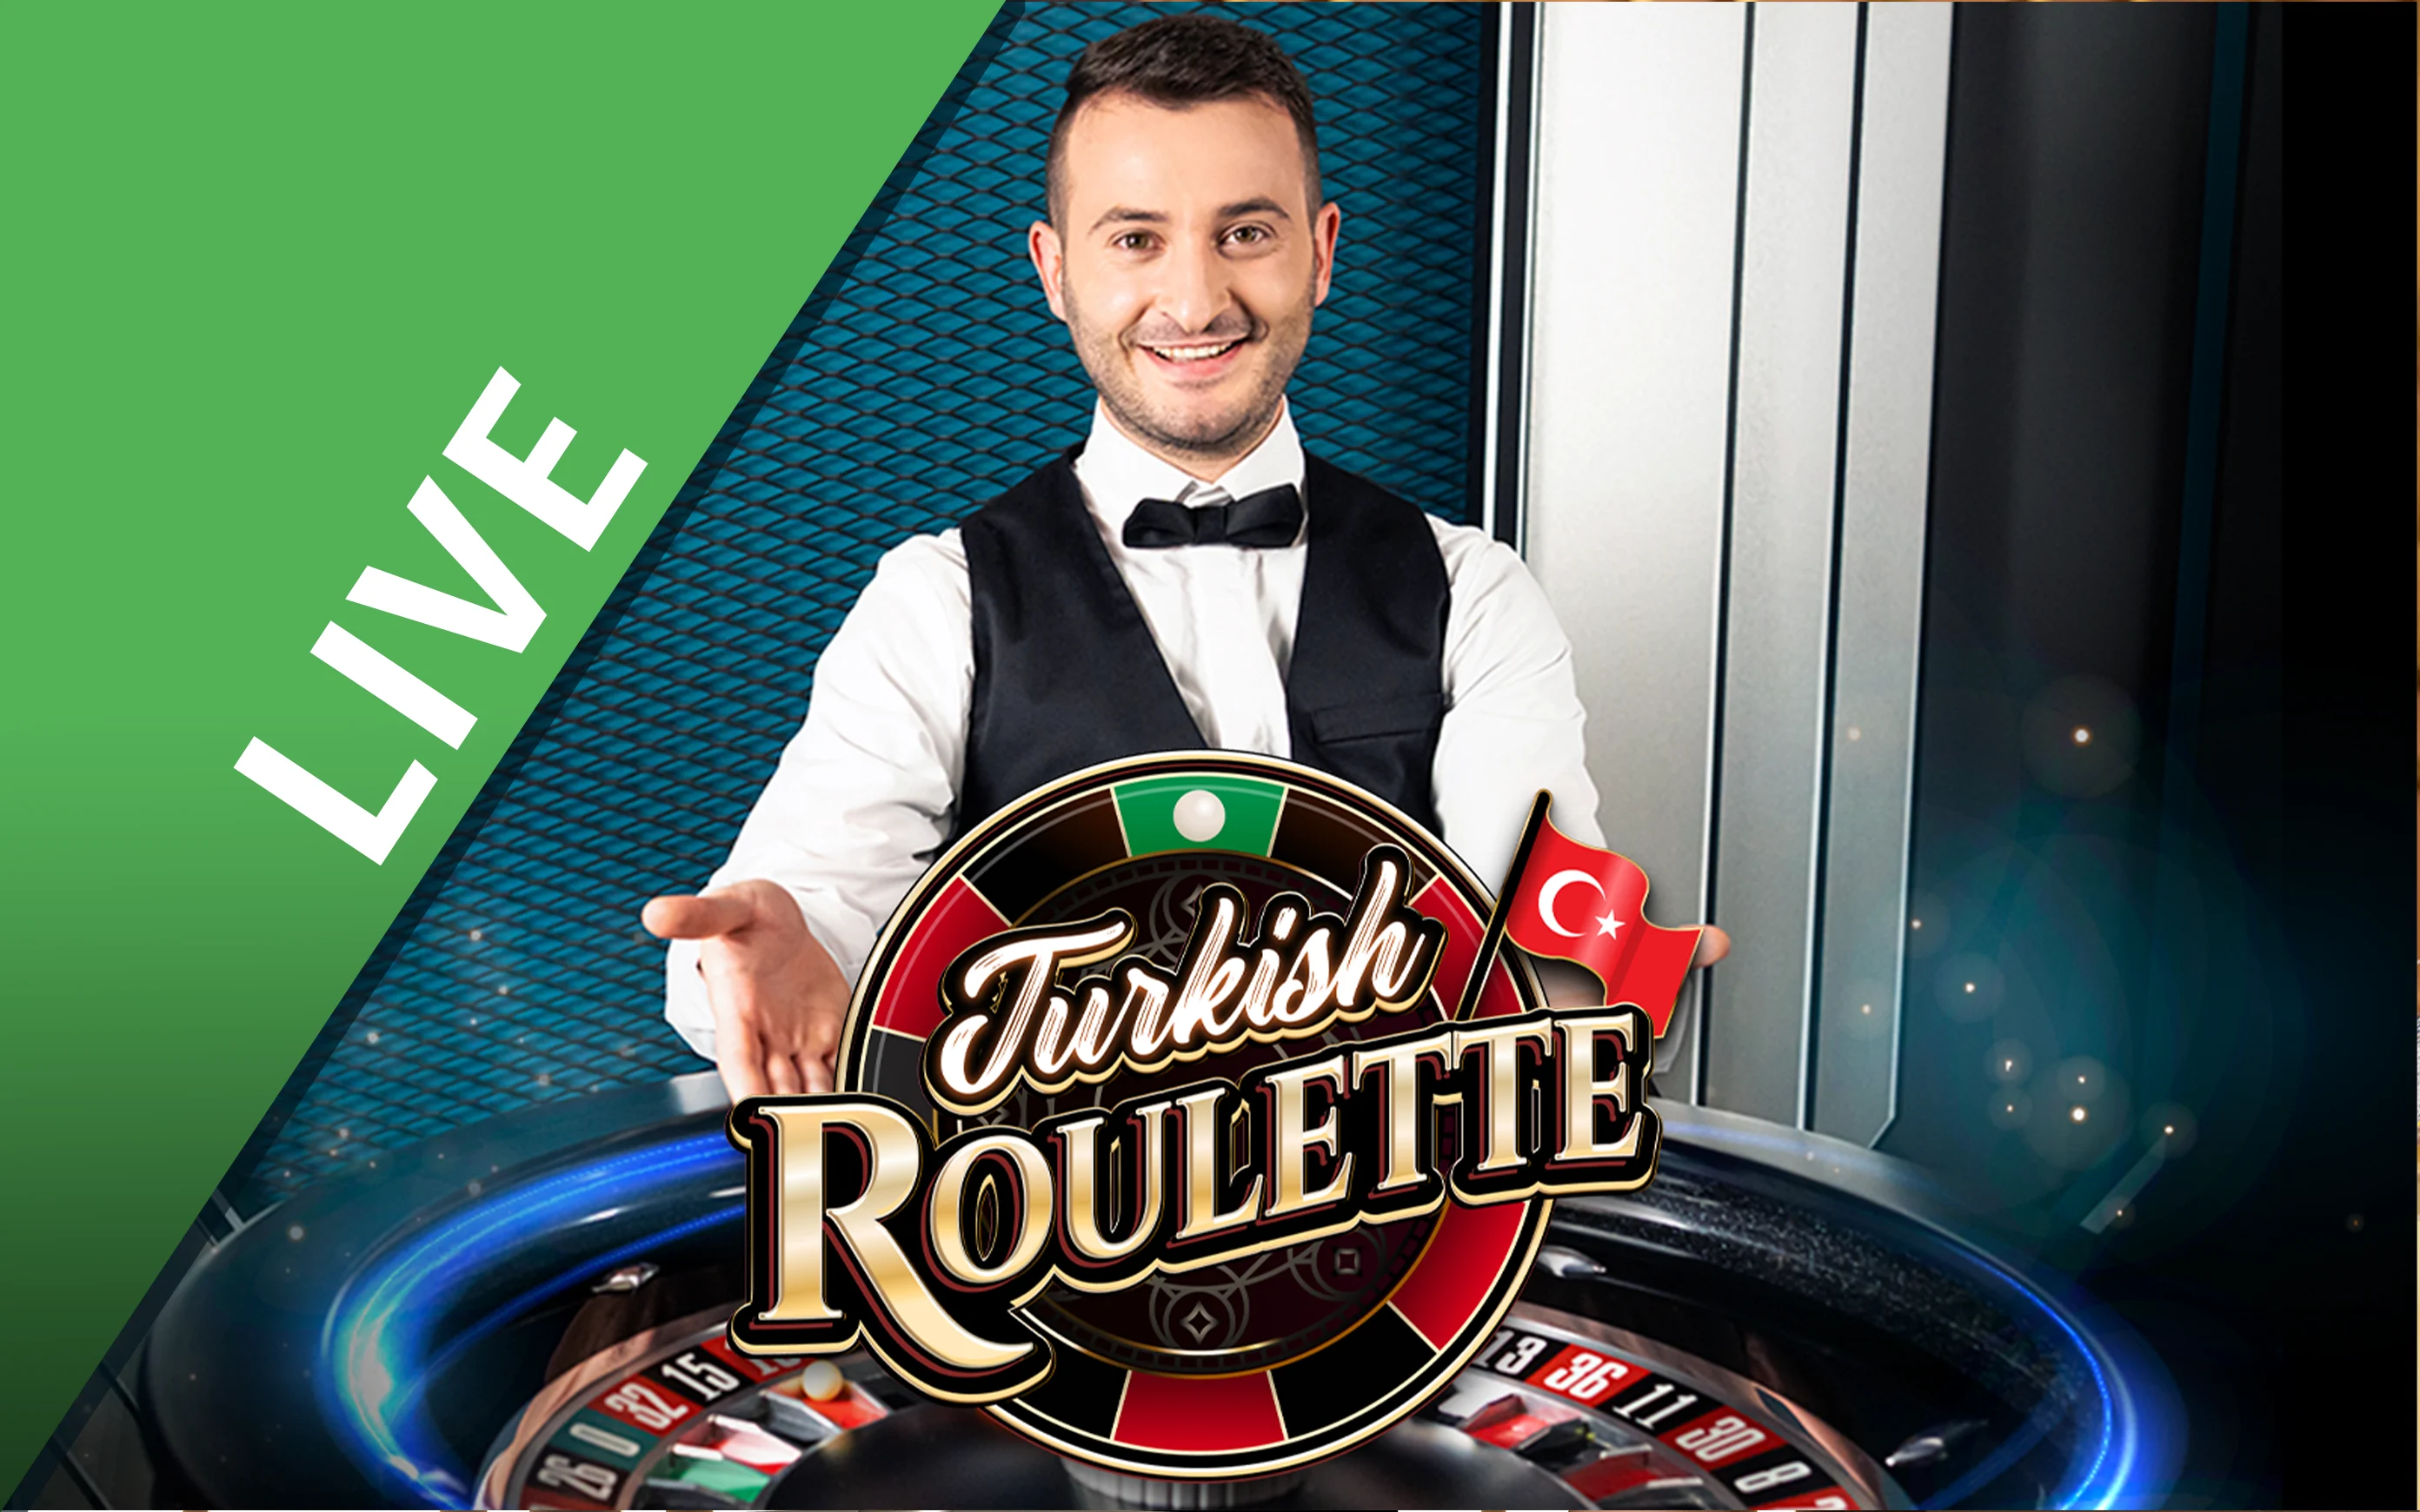 Starcasino.be online casino üzerinden Turkish Roulette oynayın